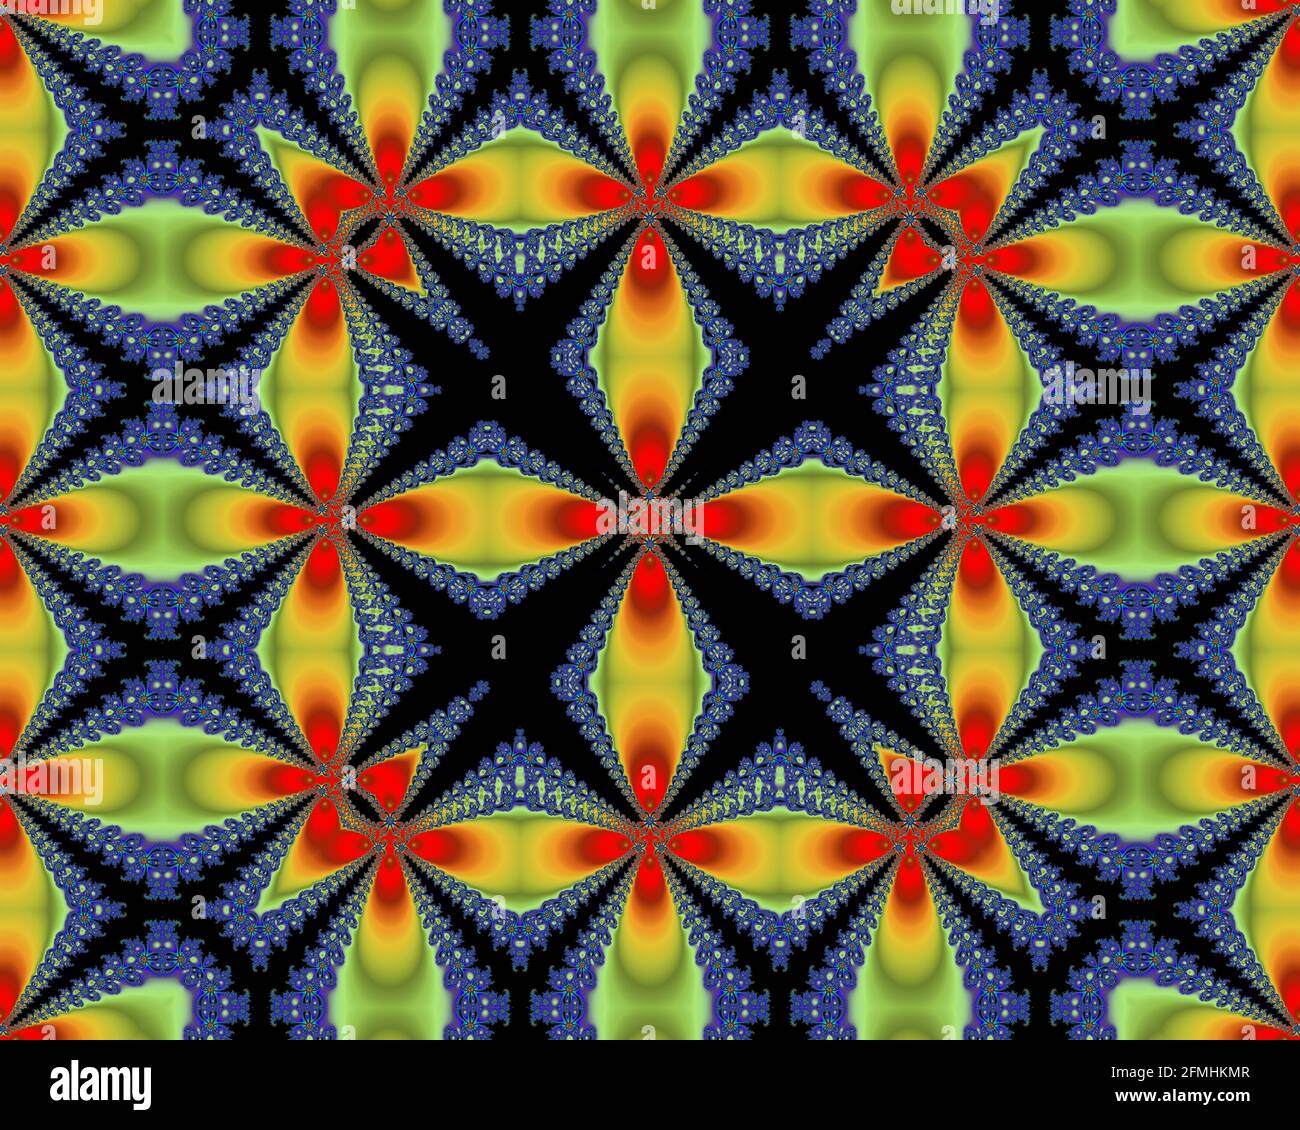 mandlebrot fractal image symmetry, digital art, colourful kaleidoscope concept Stock Photo